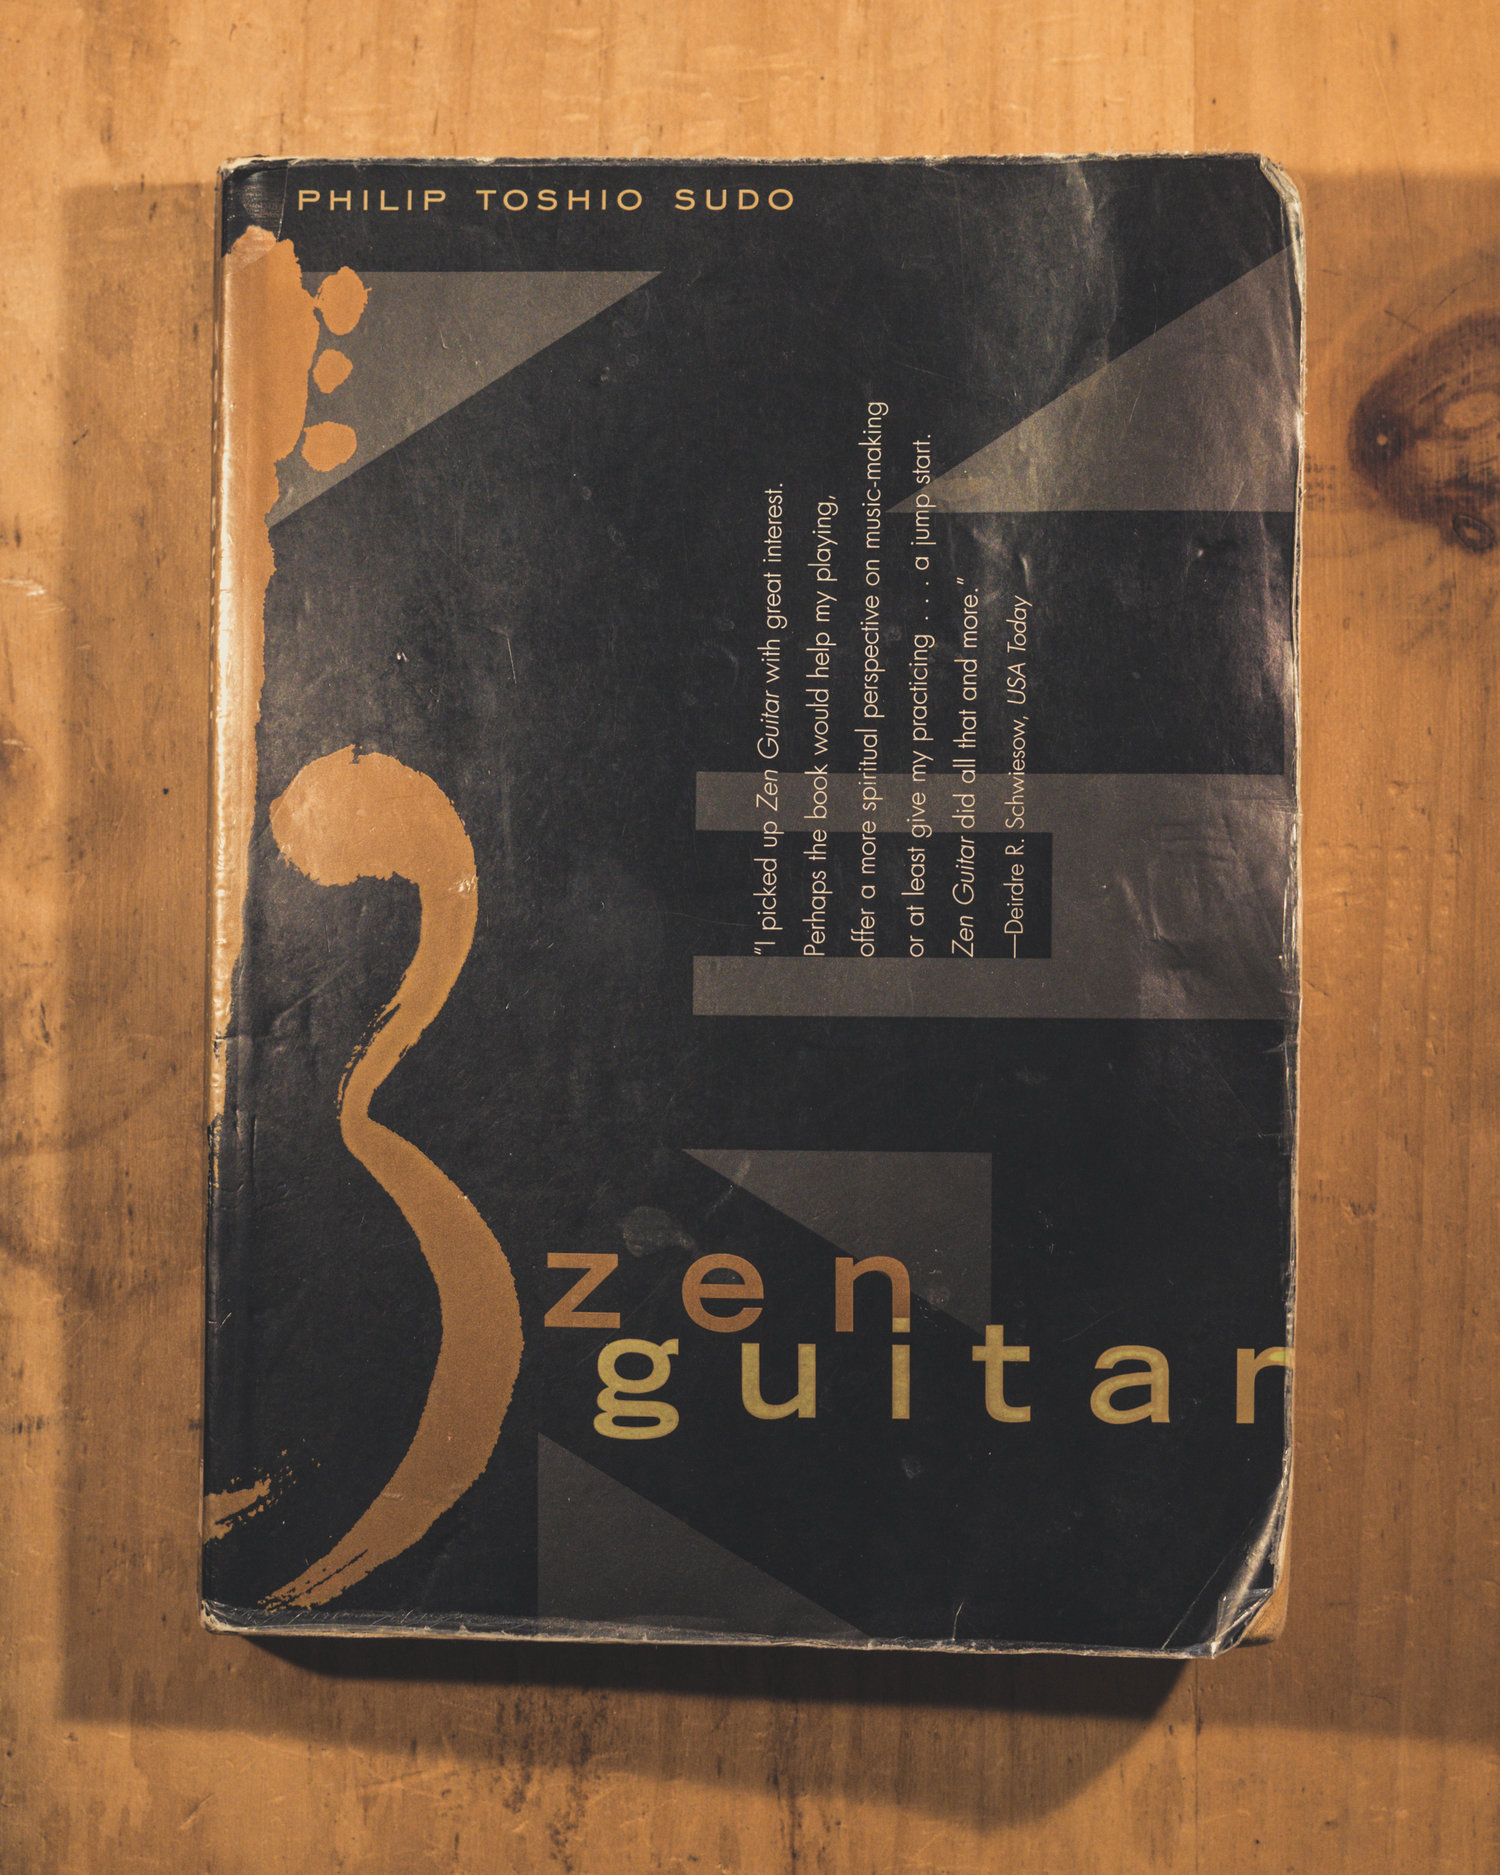 Zen Guitar by Philip Toshio Sudo